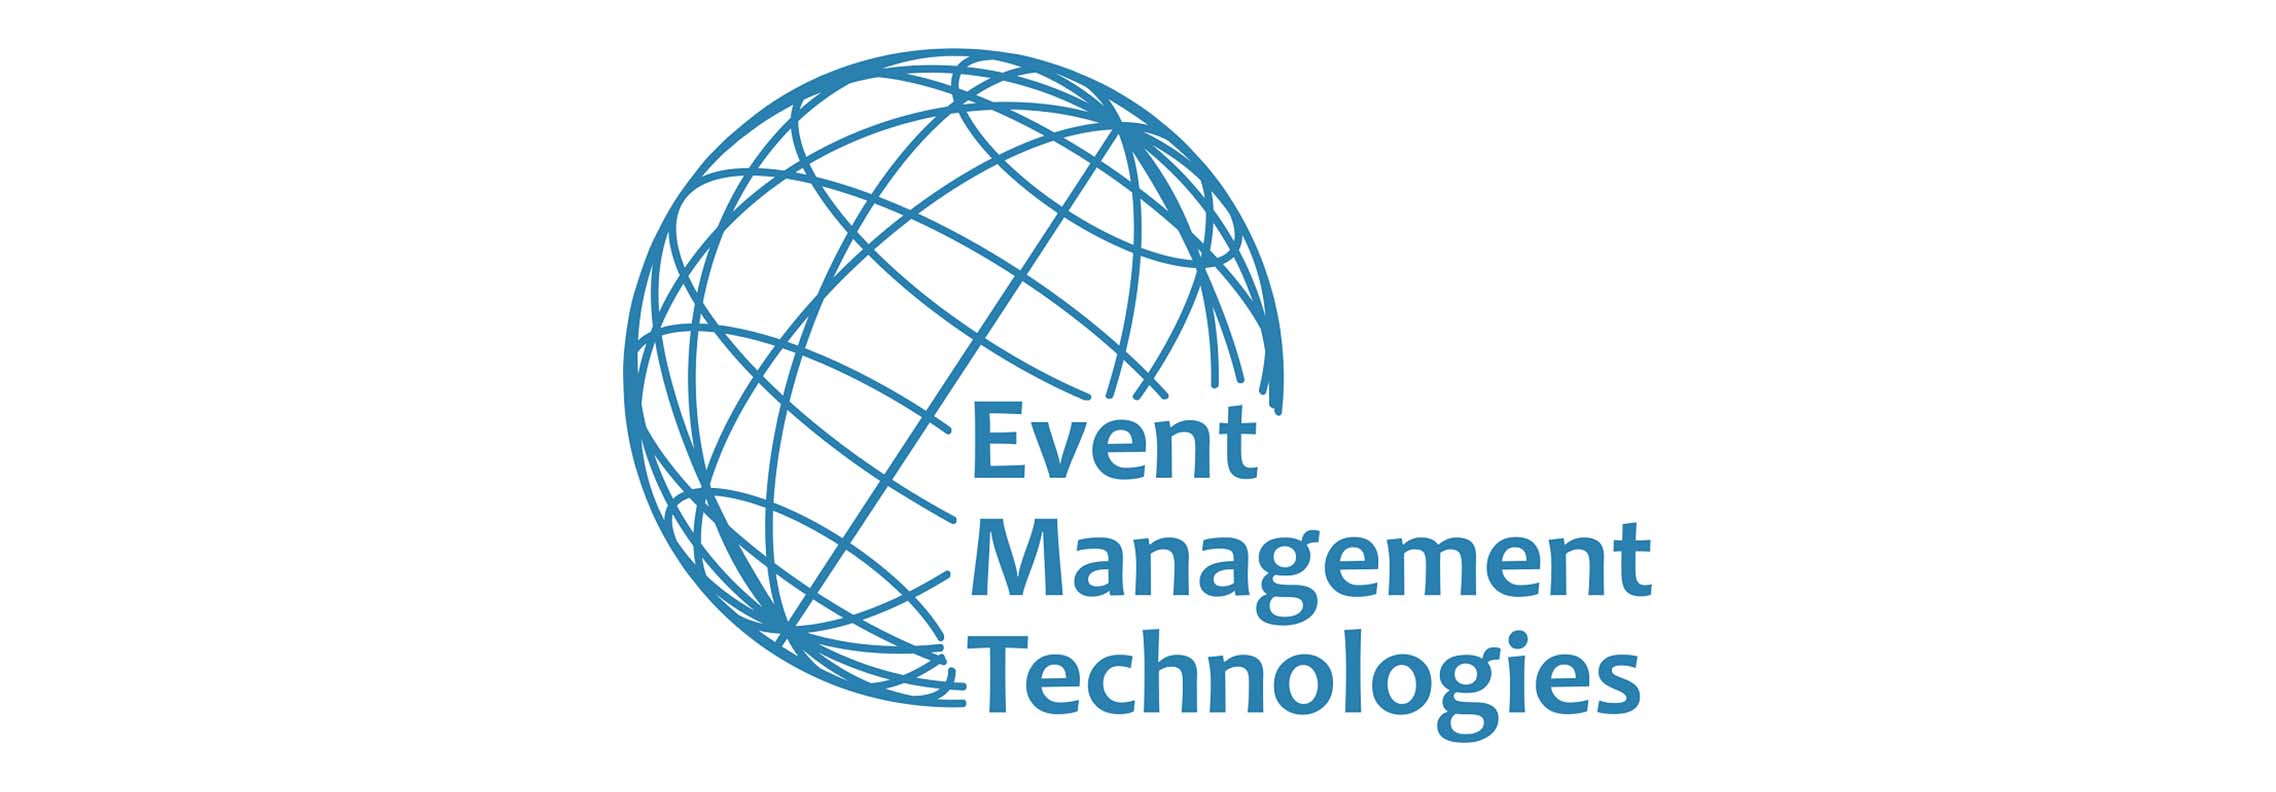 Event Management Technologies (EMT)